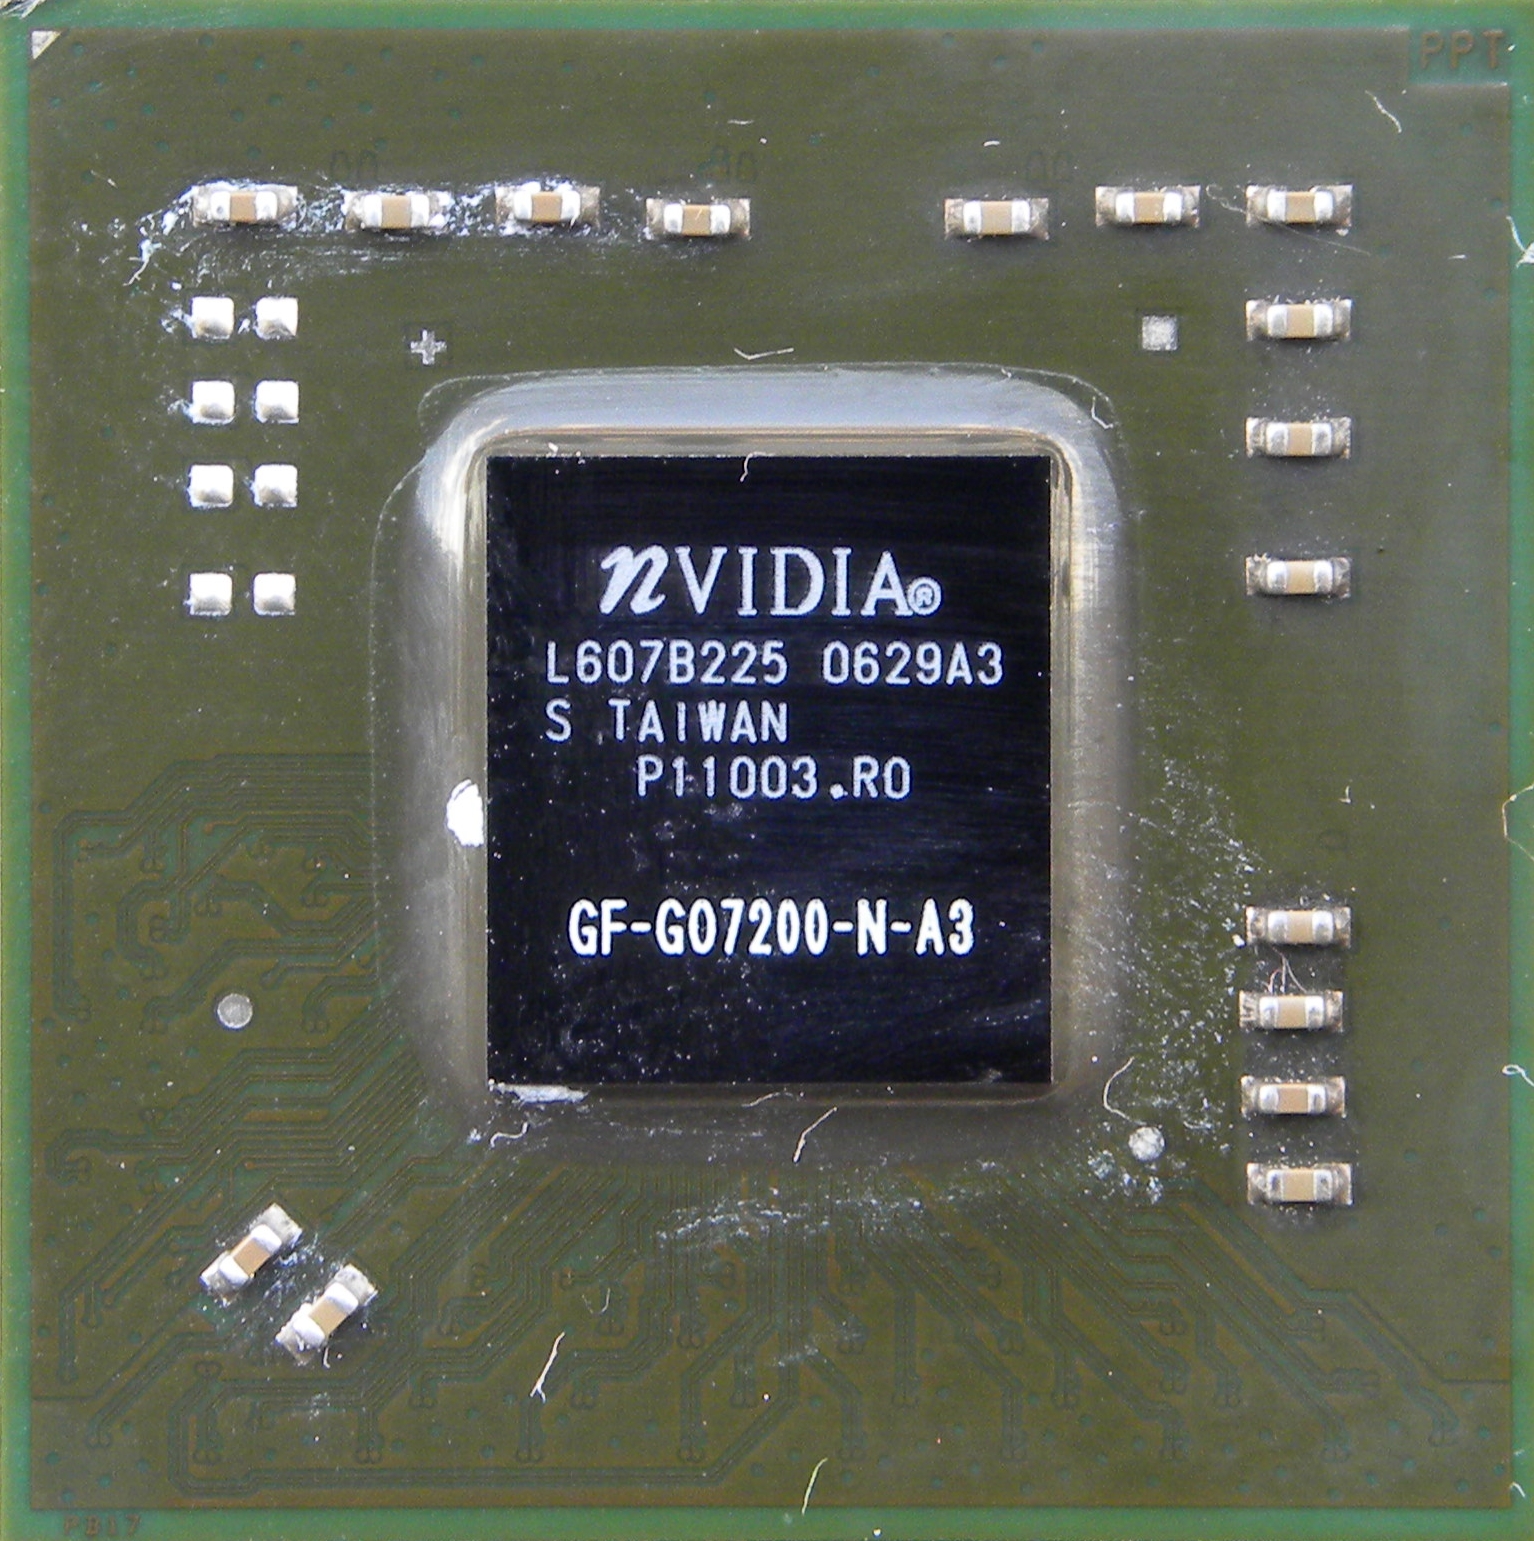 nvidia corporation g72m